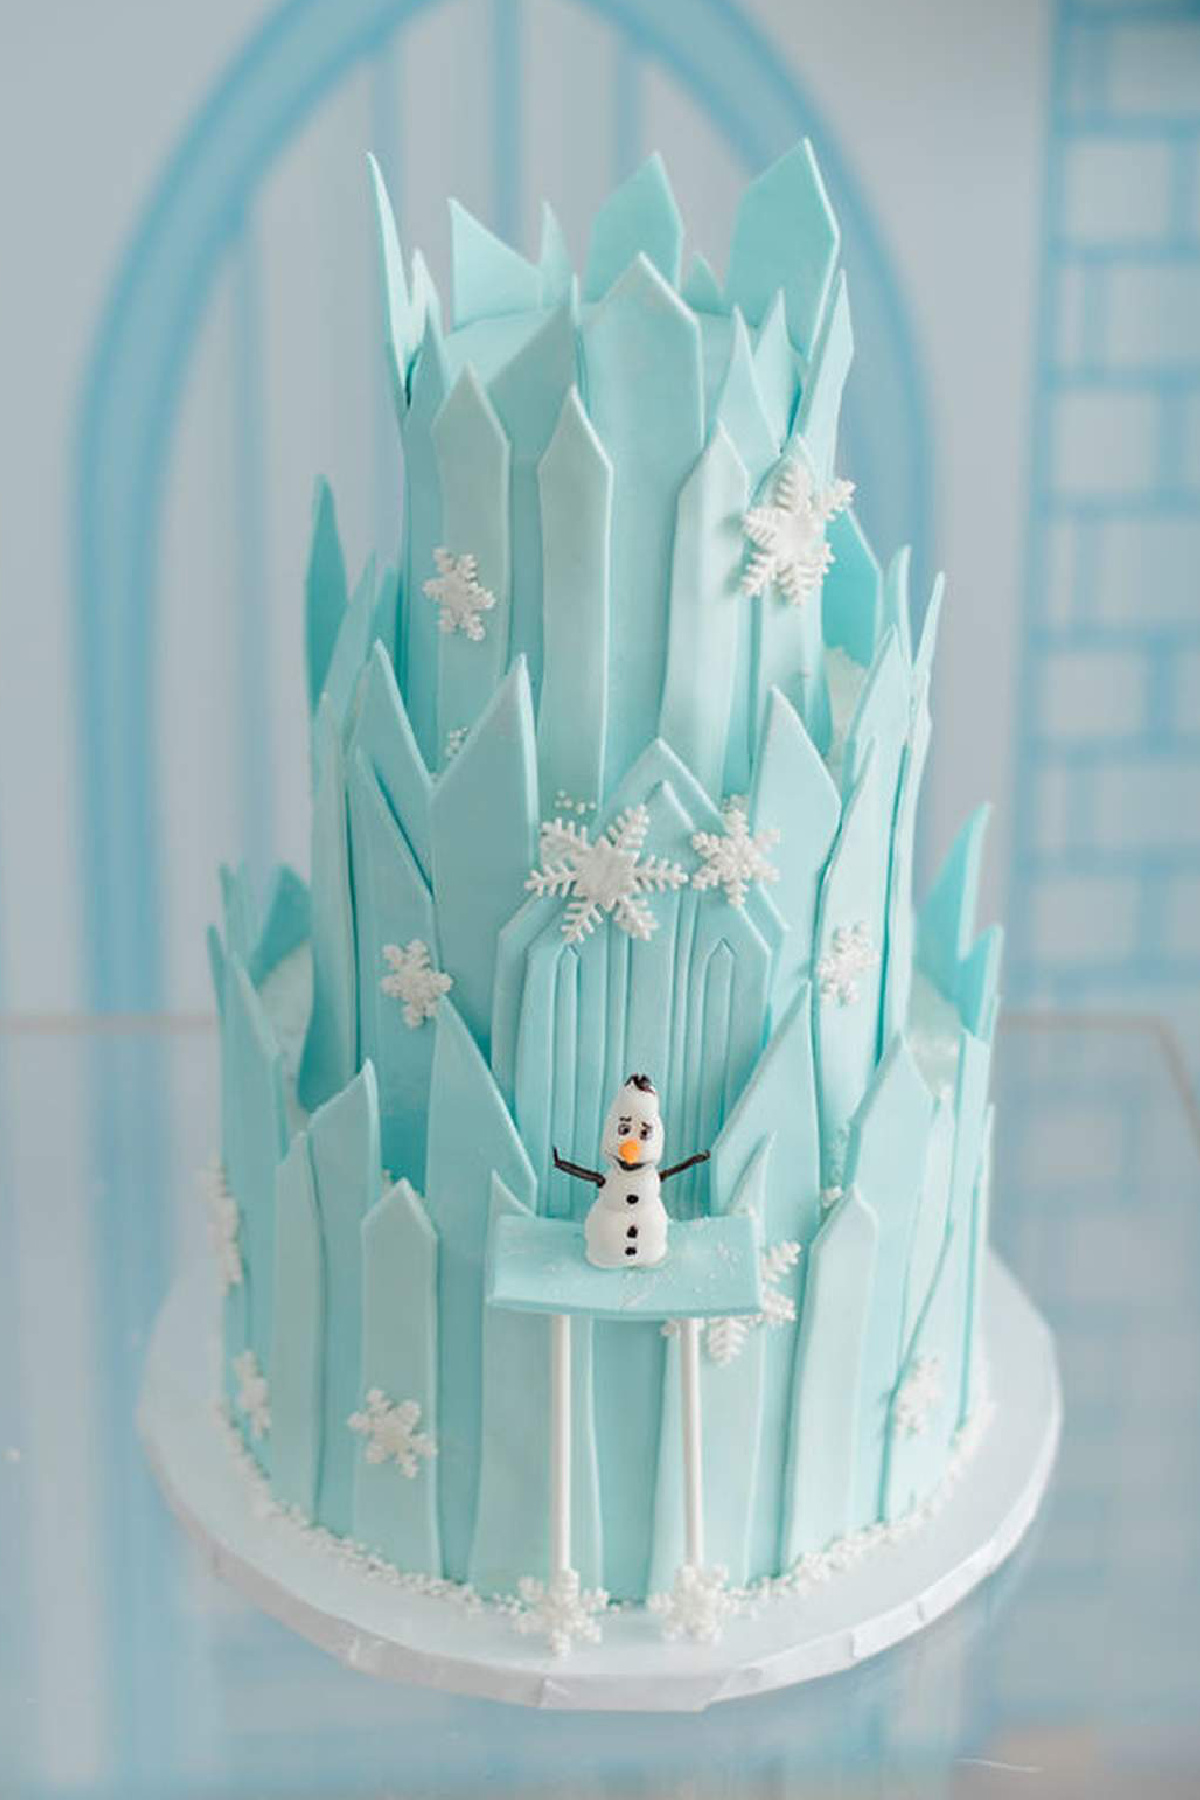 Frozen Castle Birthday Cake